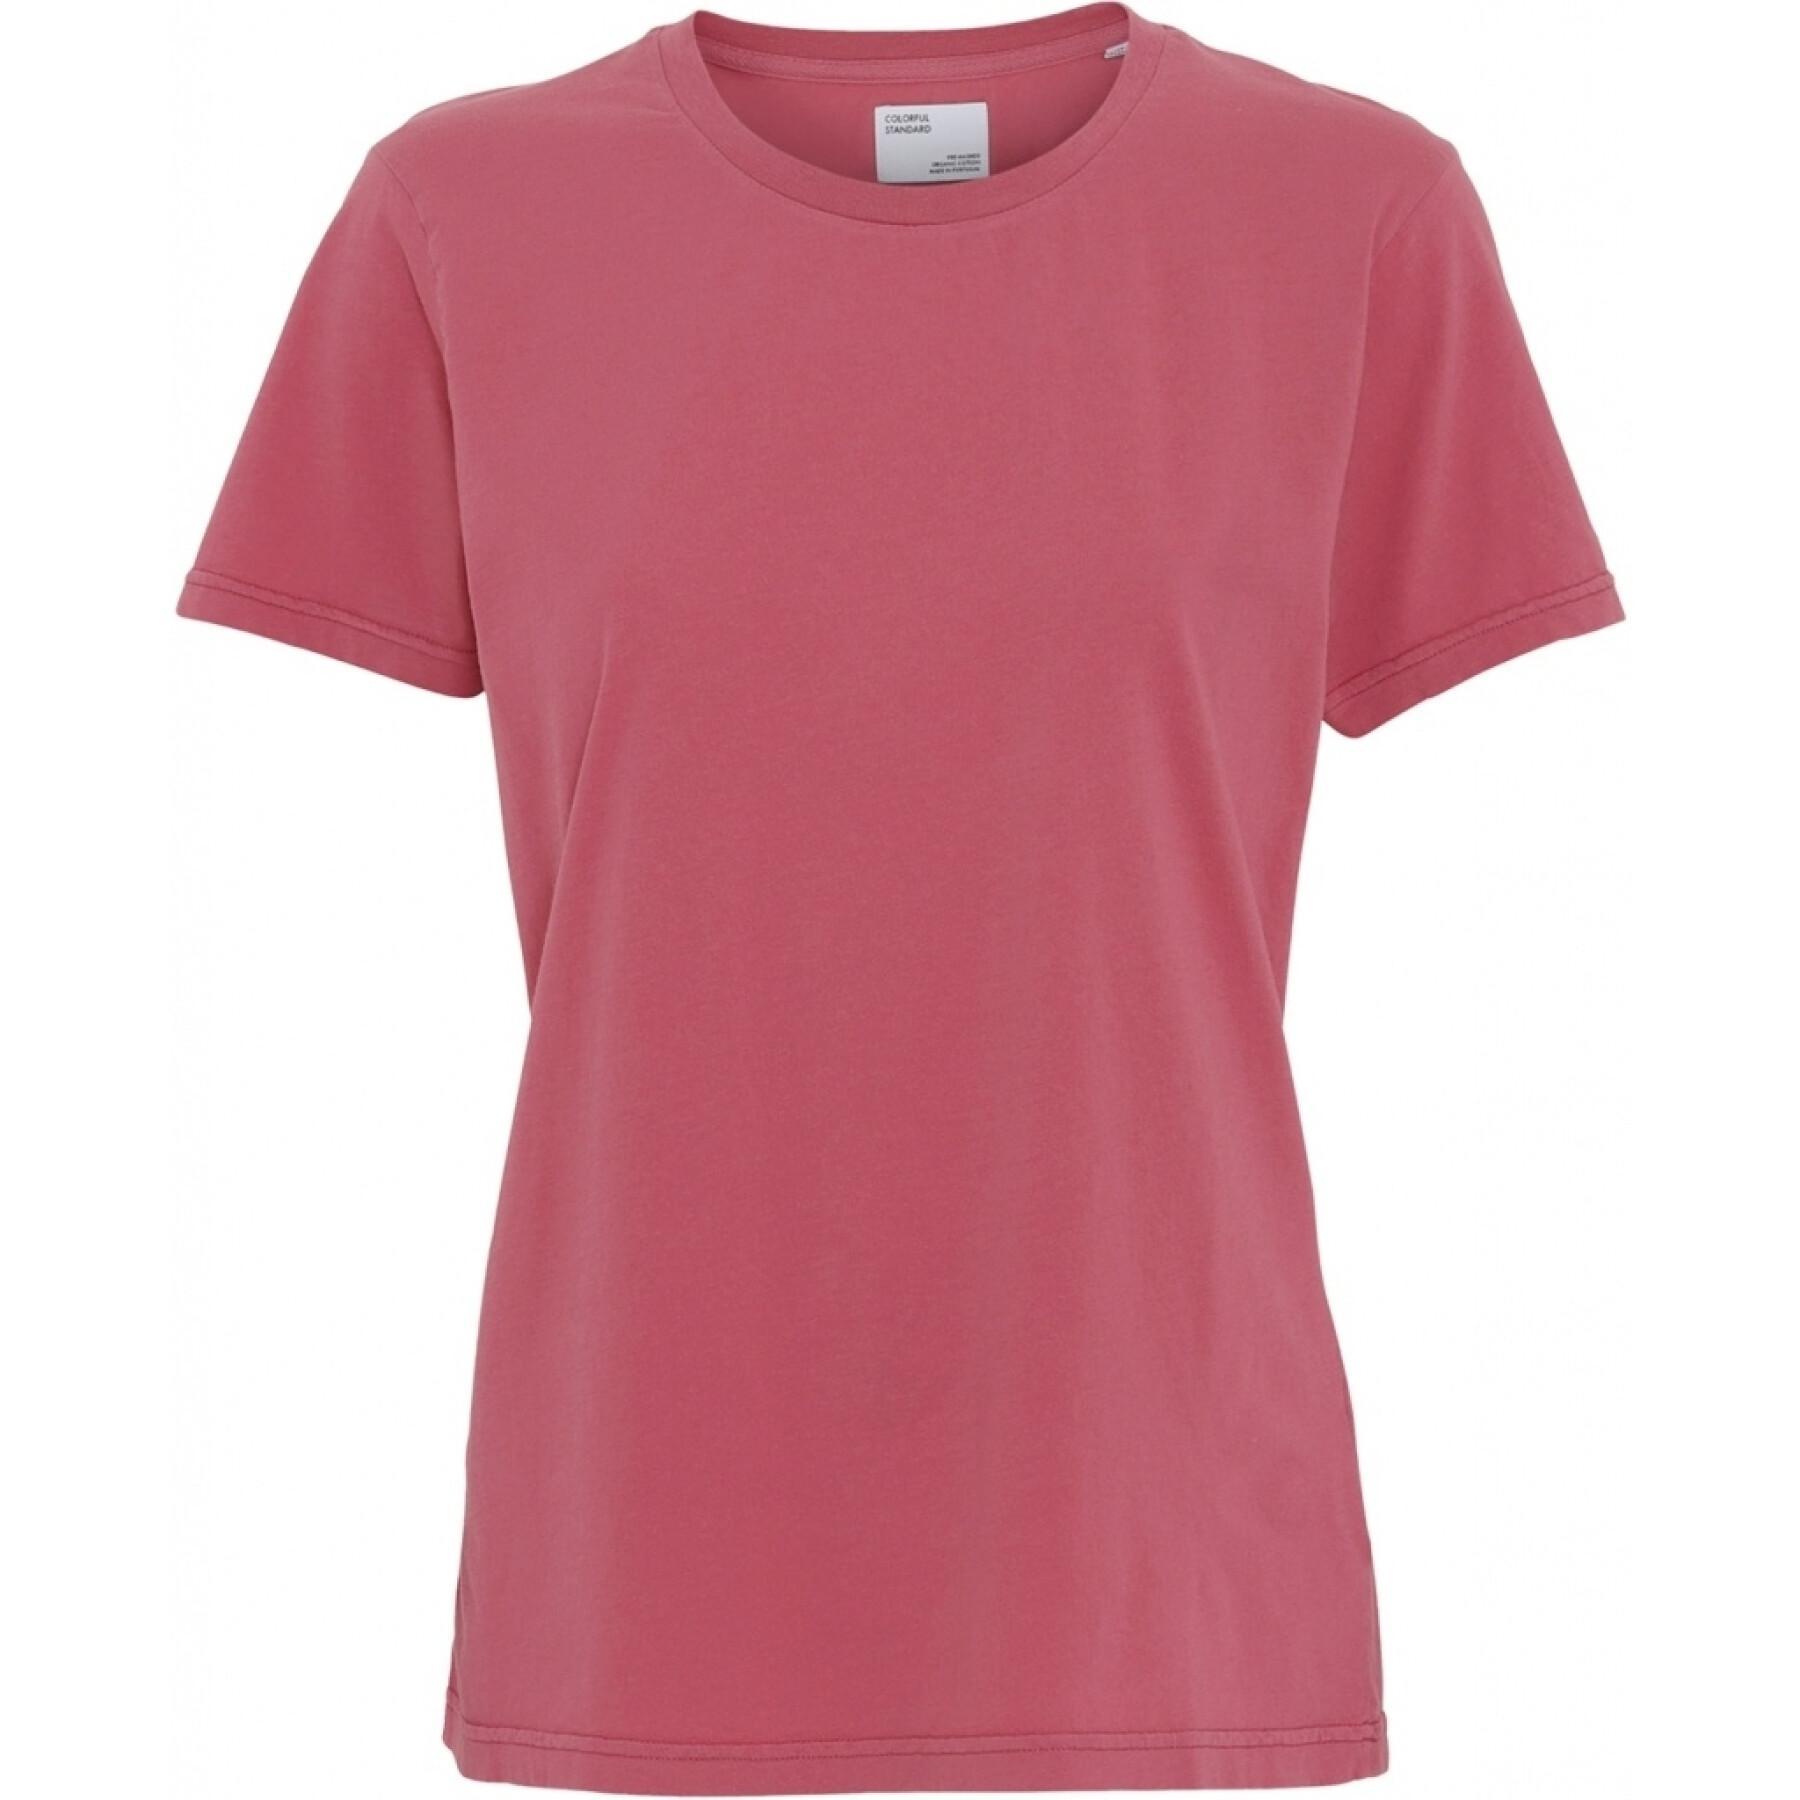 Women's T-shirt Colorful Standard Light Organic raspberry pink